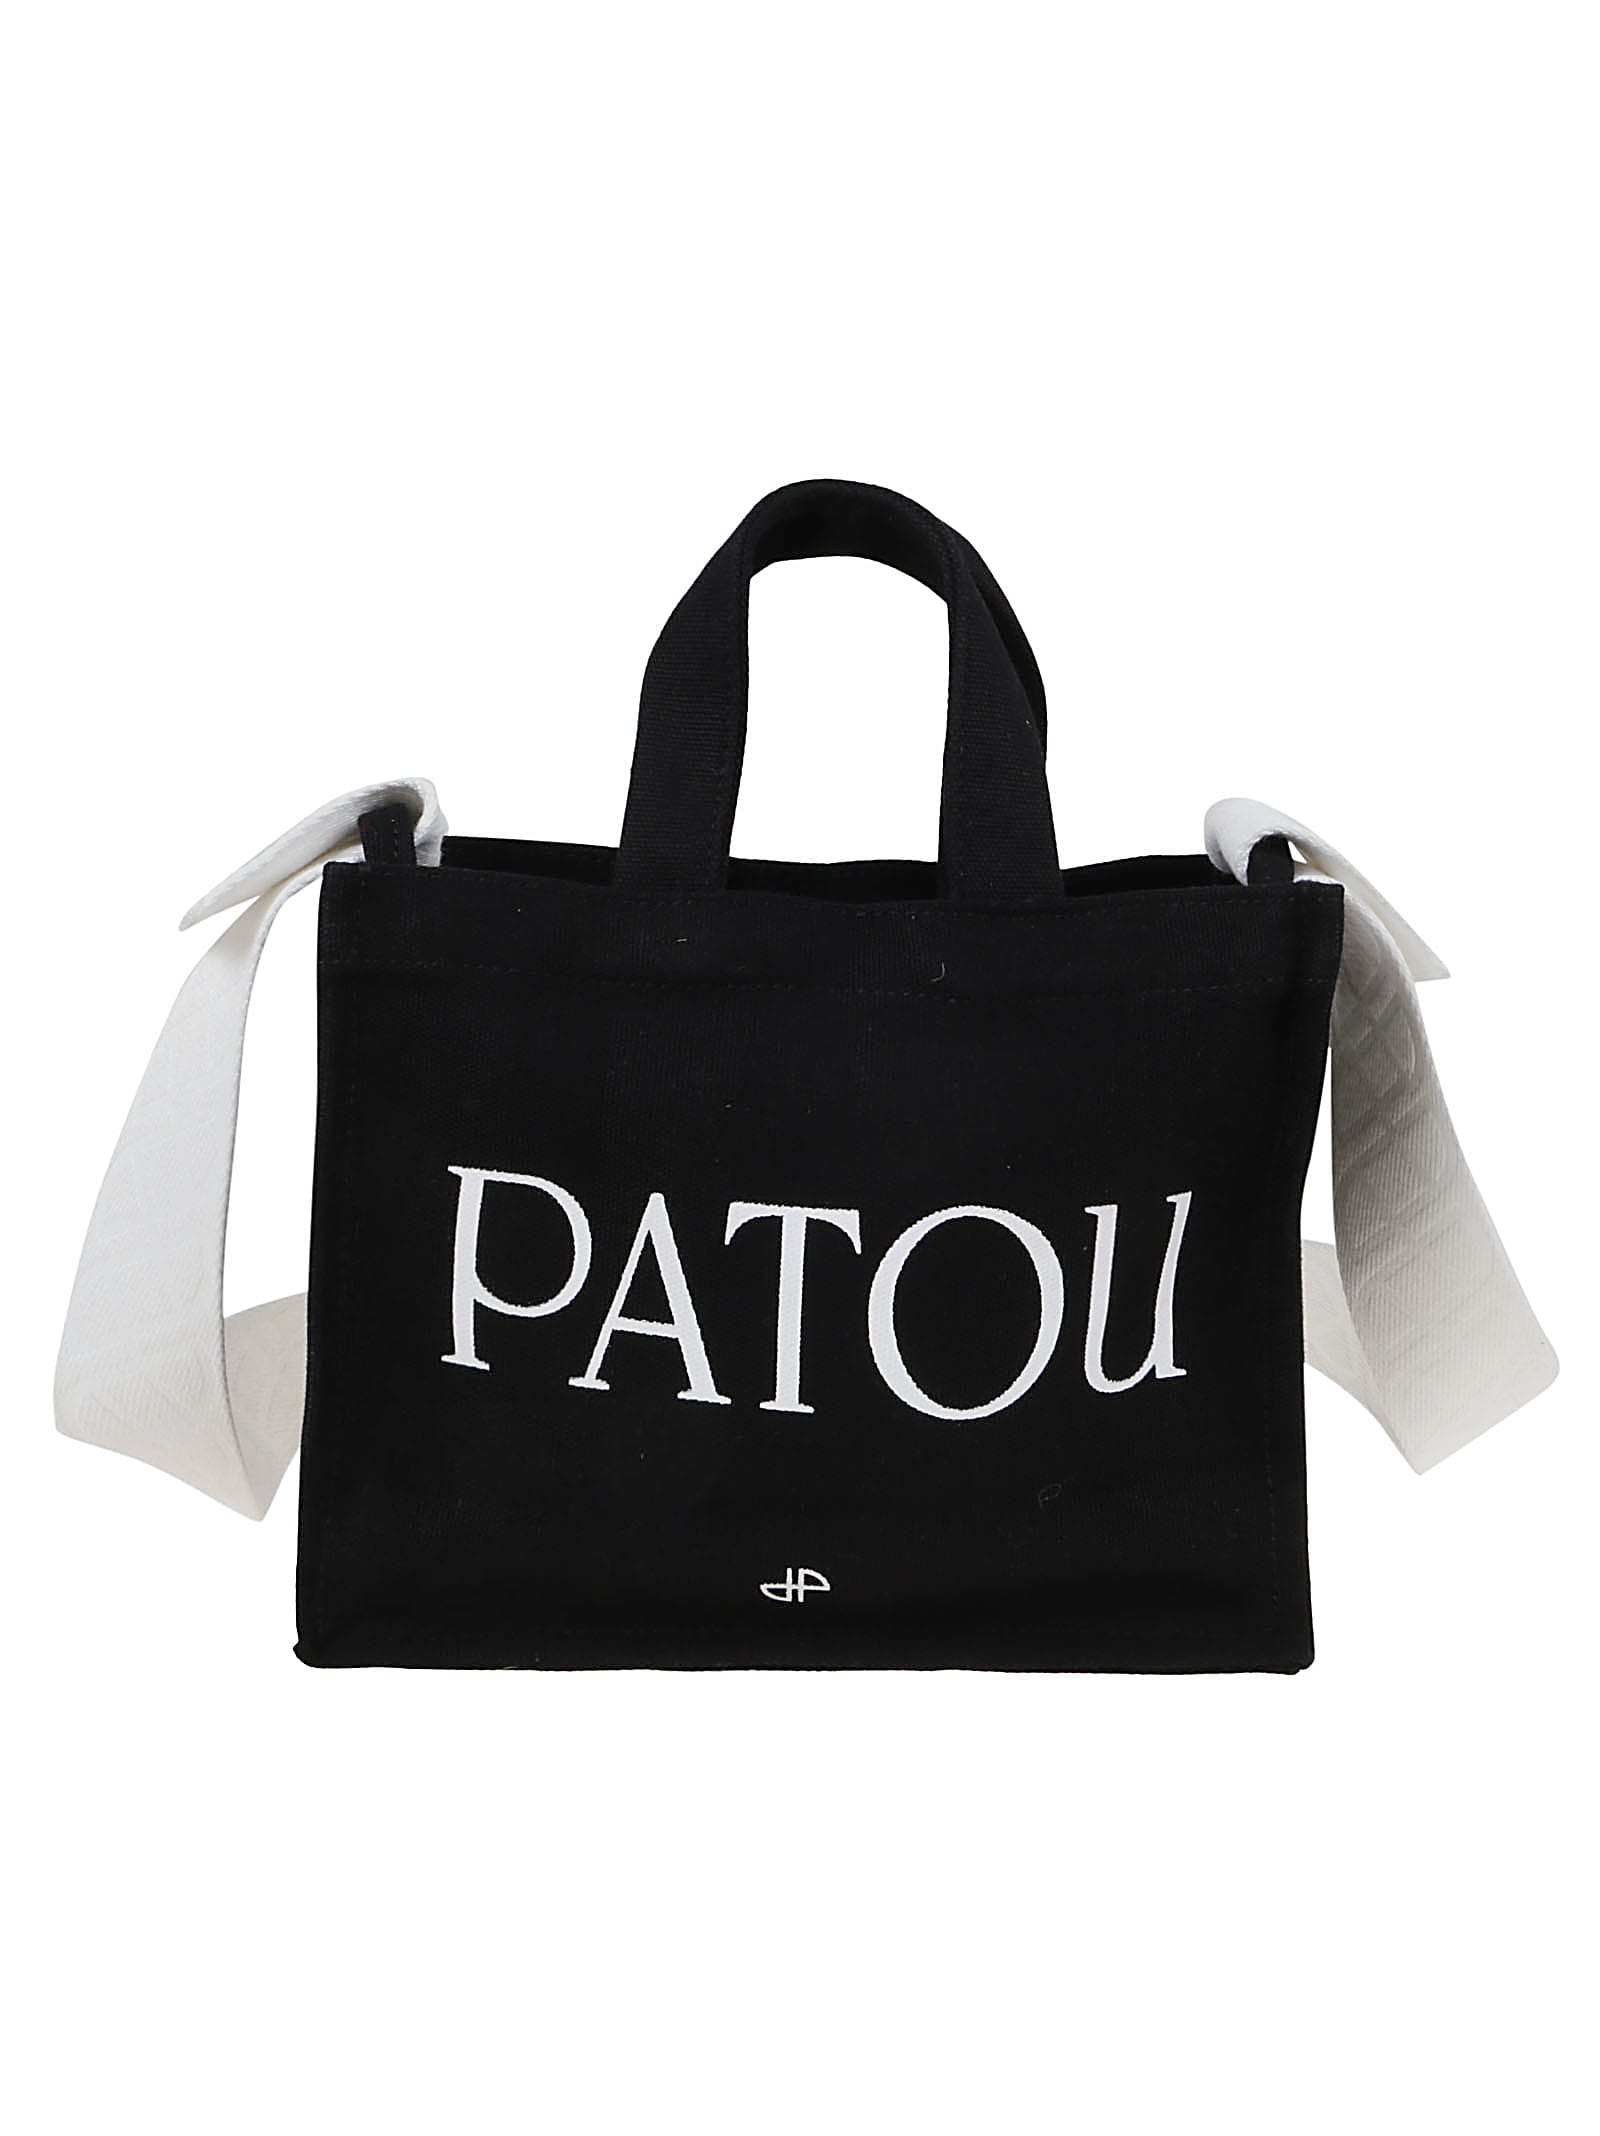 Patou Canvas Tote Bag | Smart Closet